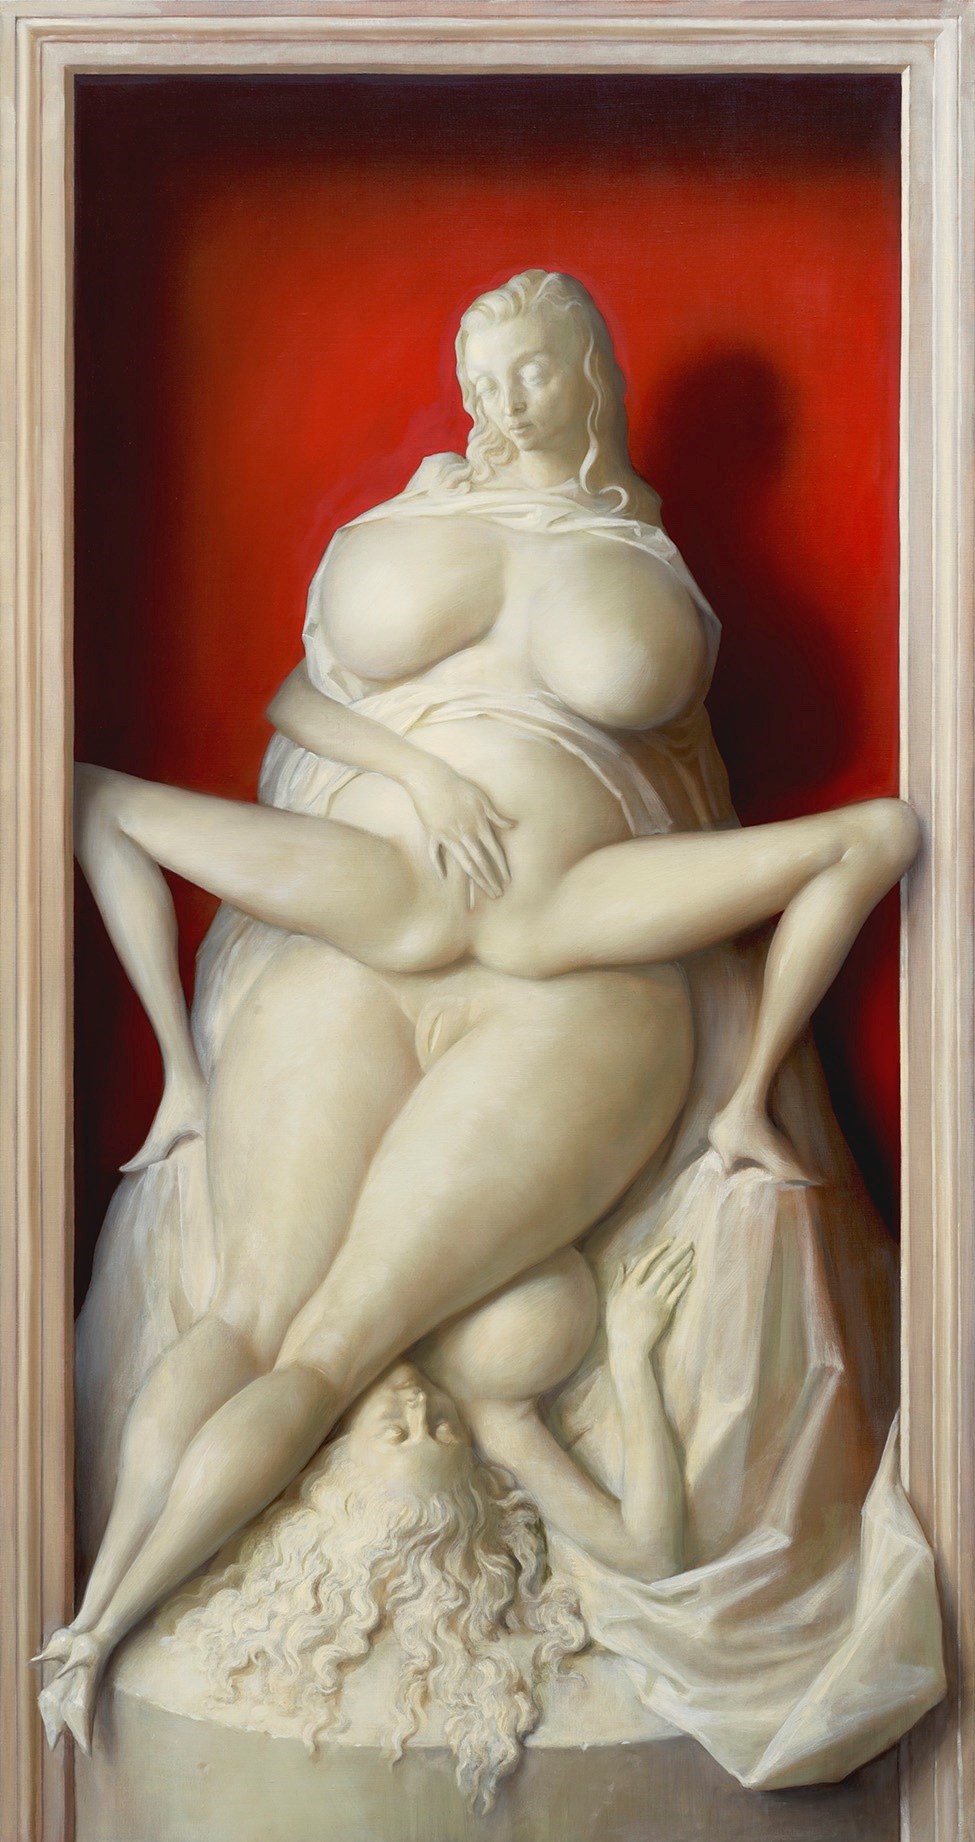 Art - John Currin captures the desolate mood of porn as classical art | Dazed